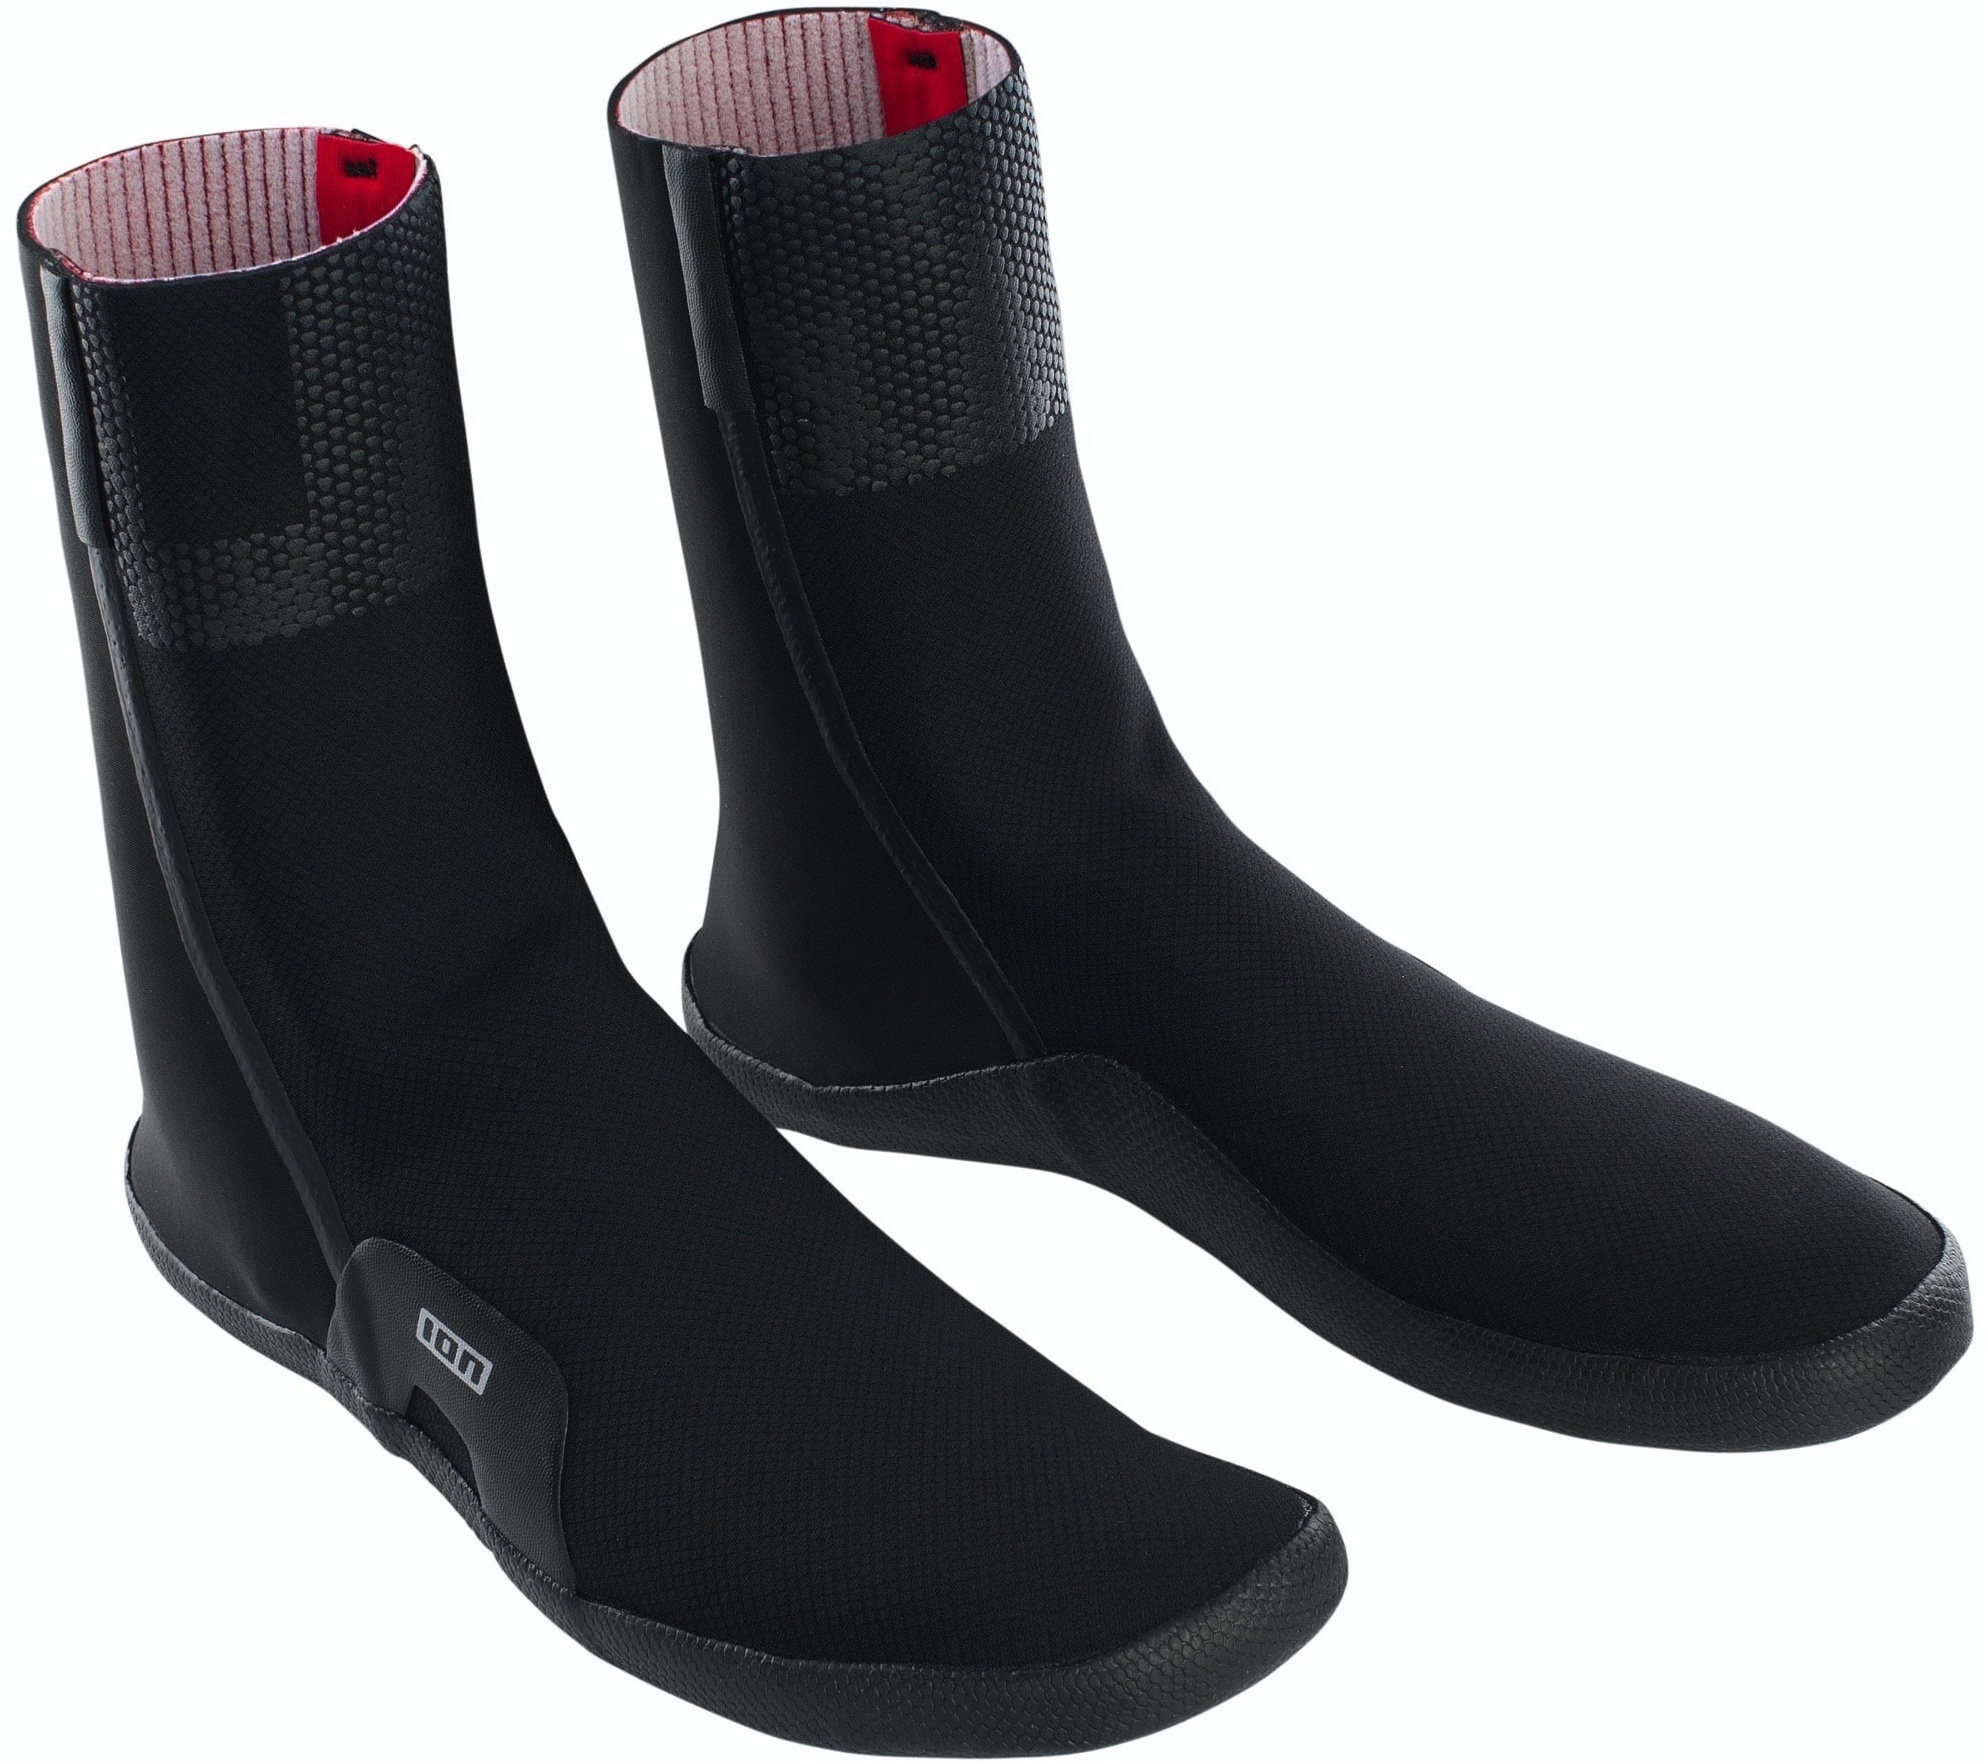 ION Ballistic Socks 3/2 Round Toe Neoprensocken 23 Warm Surf, Größe in EU: 38.5, Farbe: 900 black